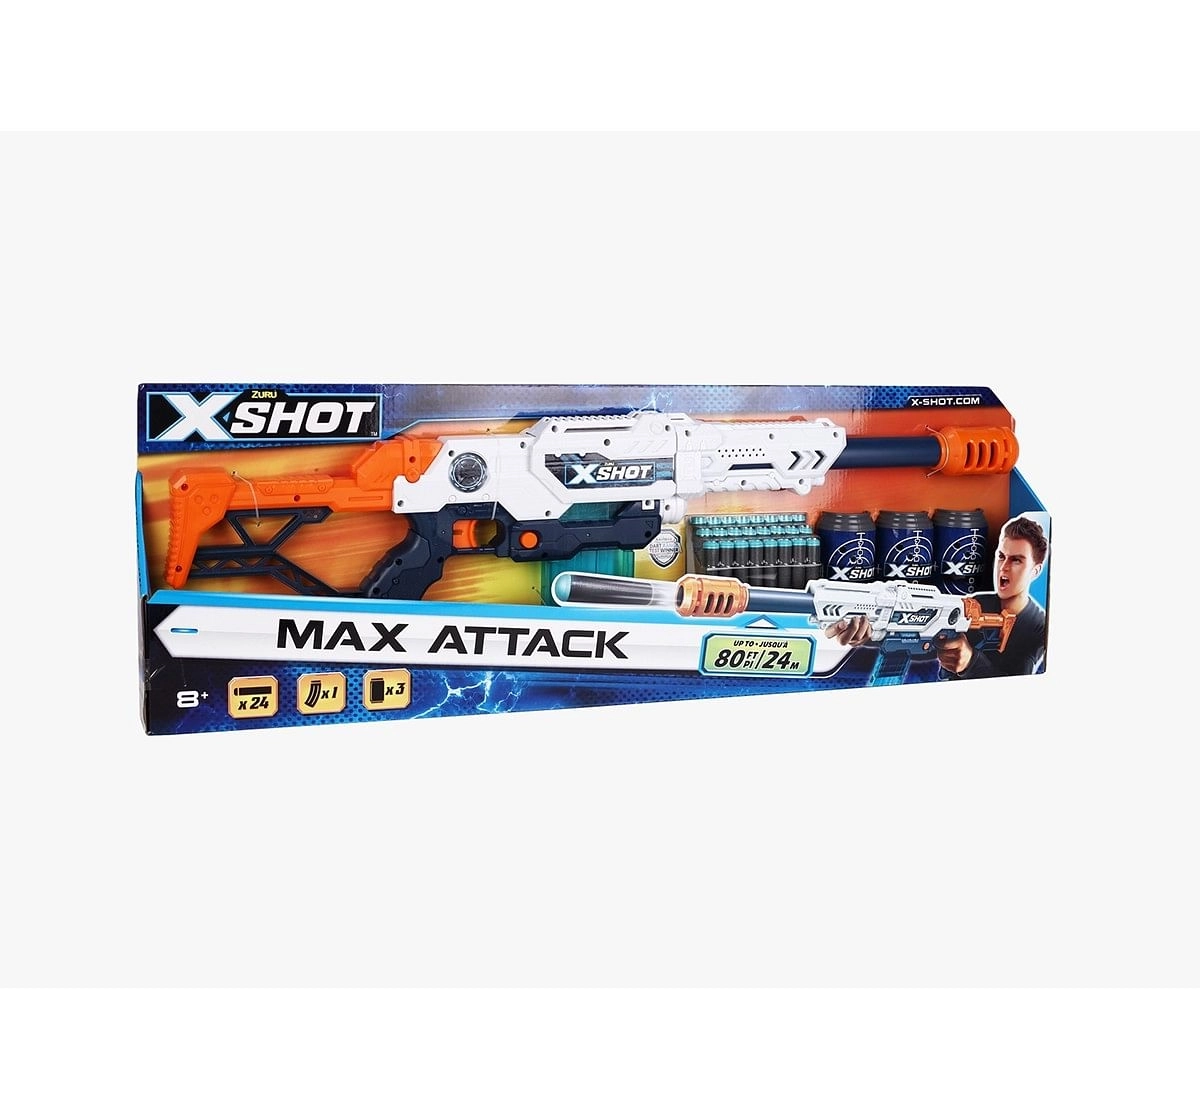 X-Shot Ne Zuru Clip Blaster L Max Attack Blasters for Kids age 8Y+ 